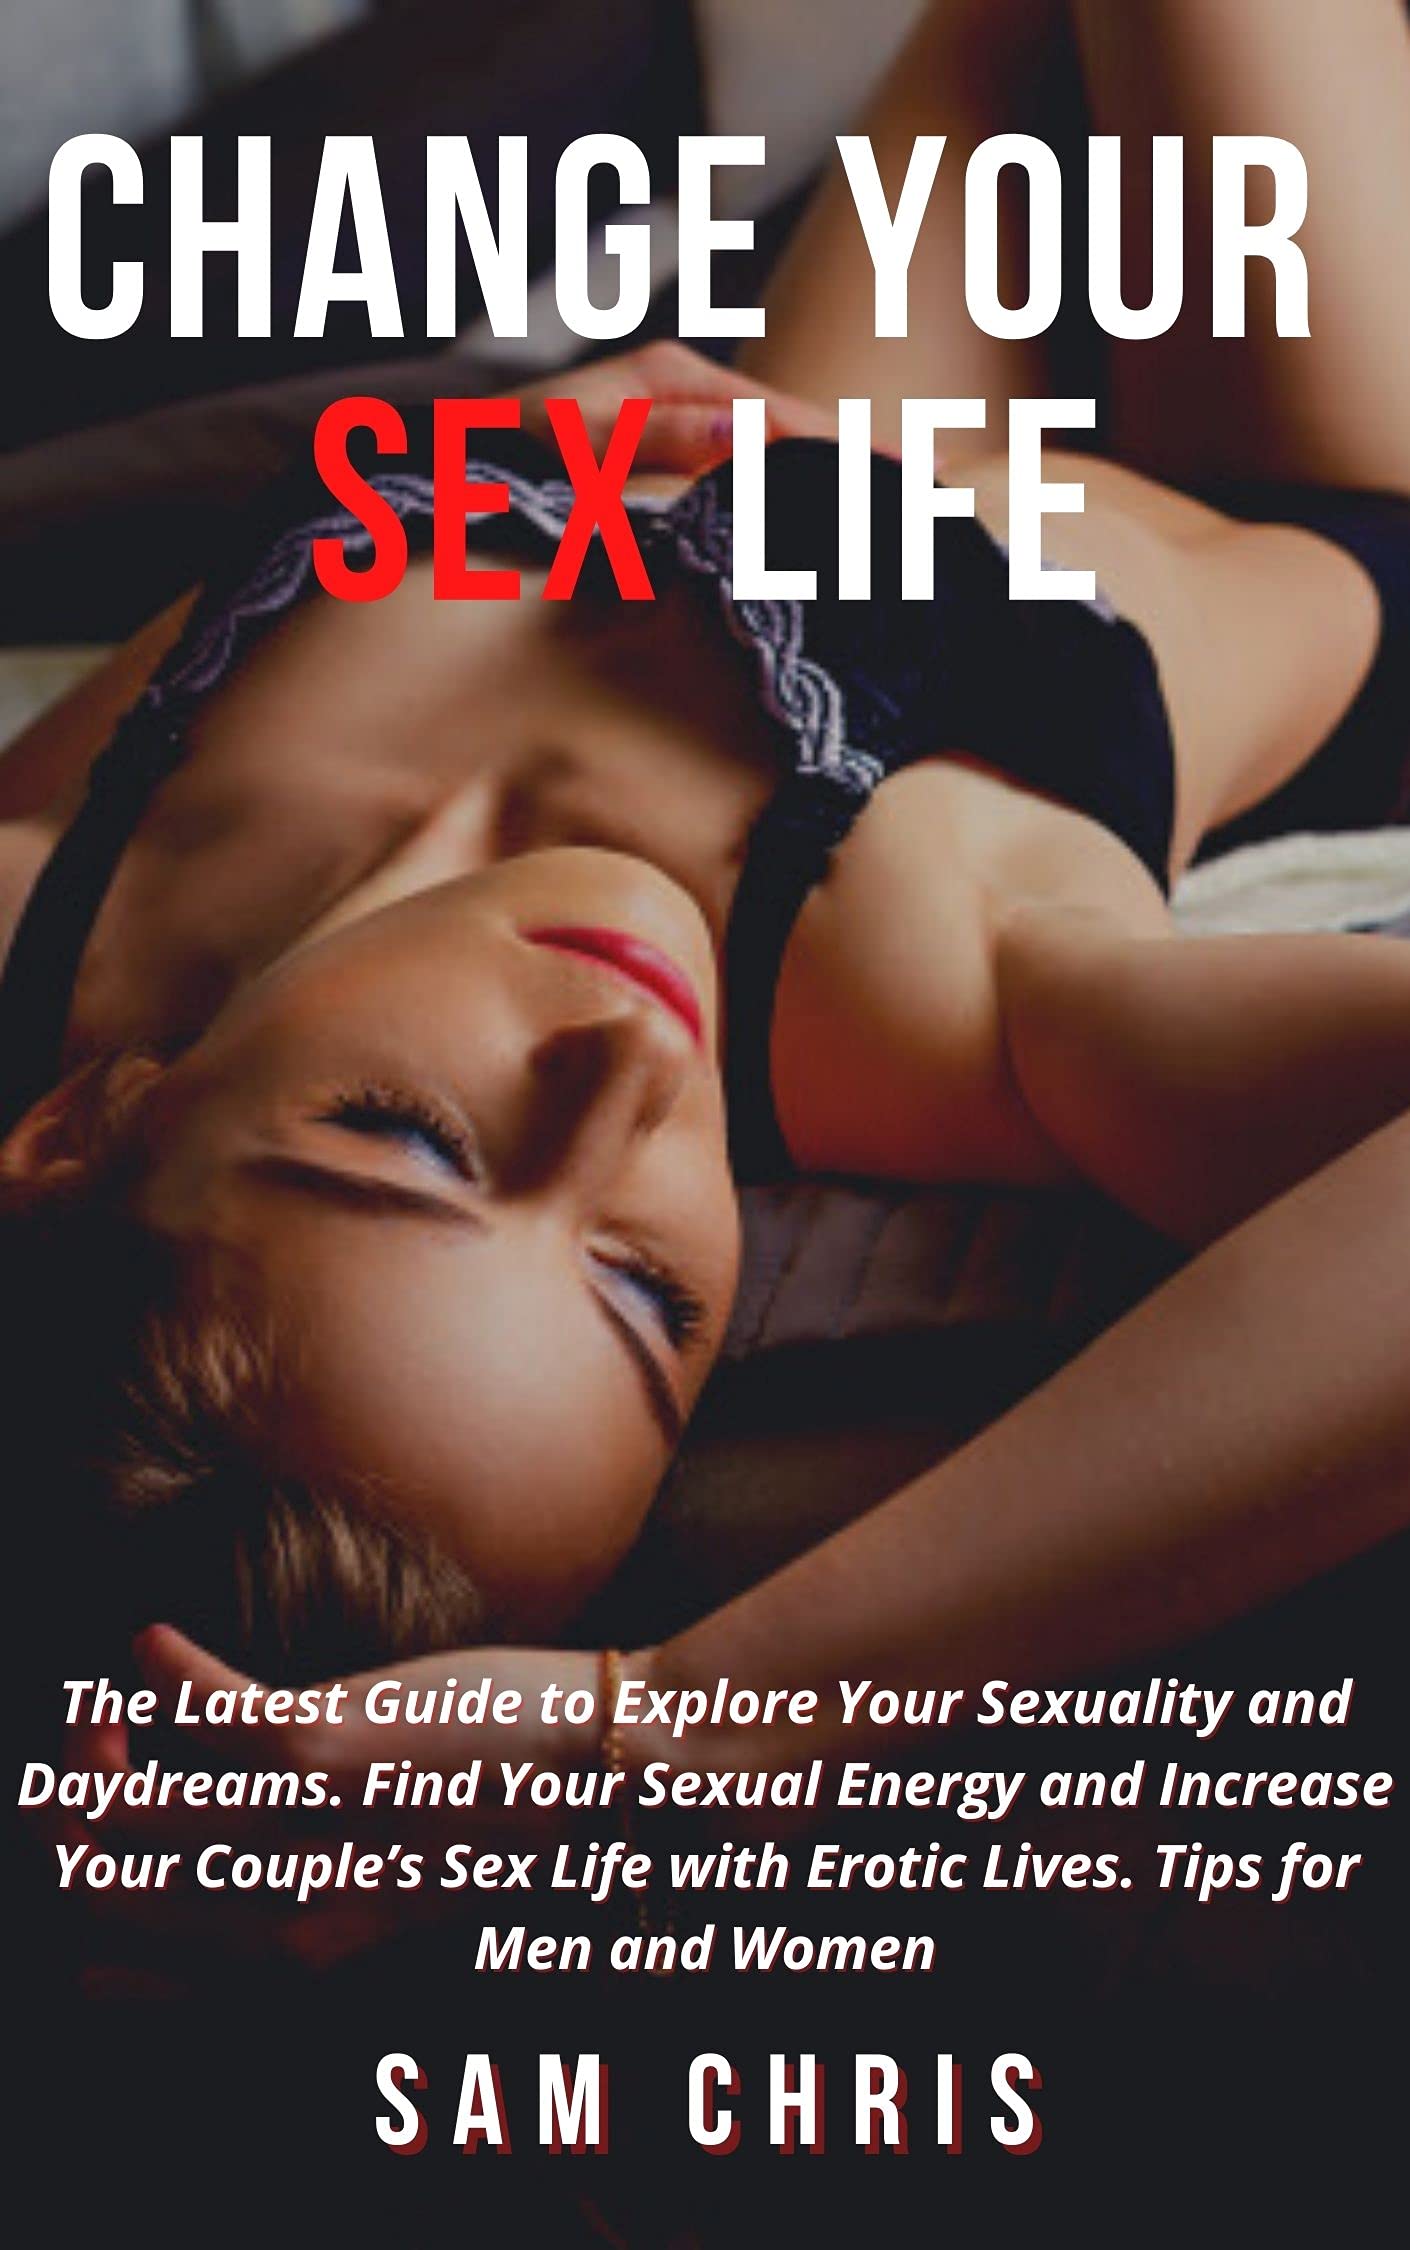 allen malapira recommends Sex Change Erotic Stories